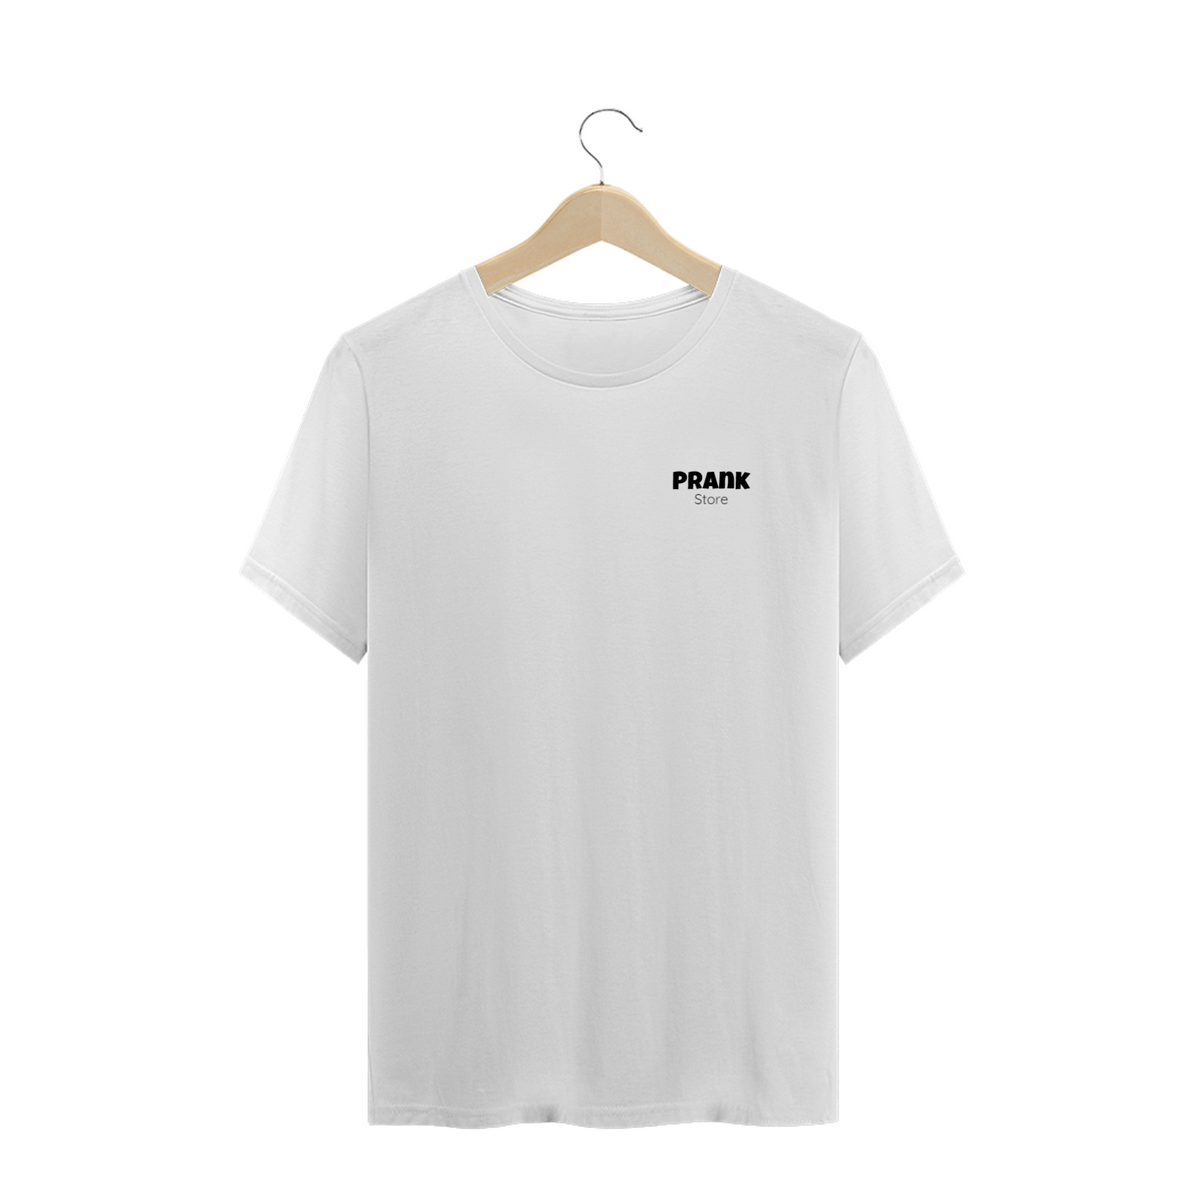 Nome do produto: T-shirt Masculina Branca e Colorida (letra preta) Prank Store